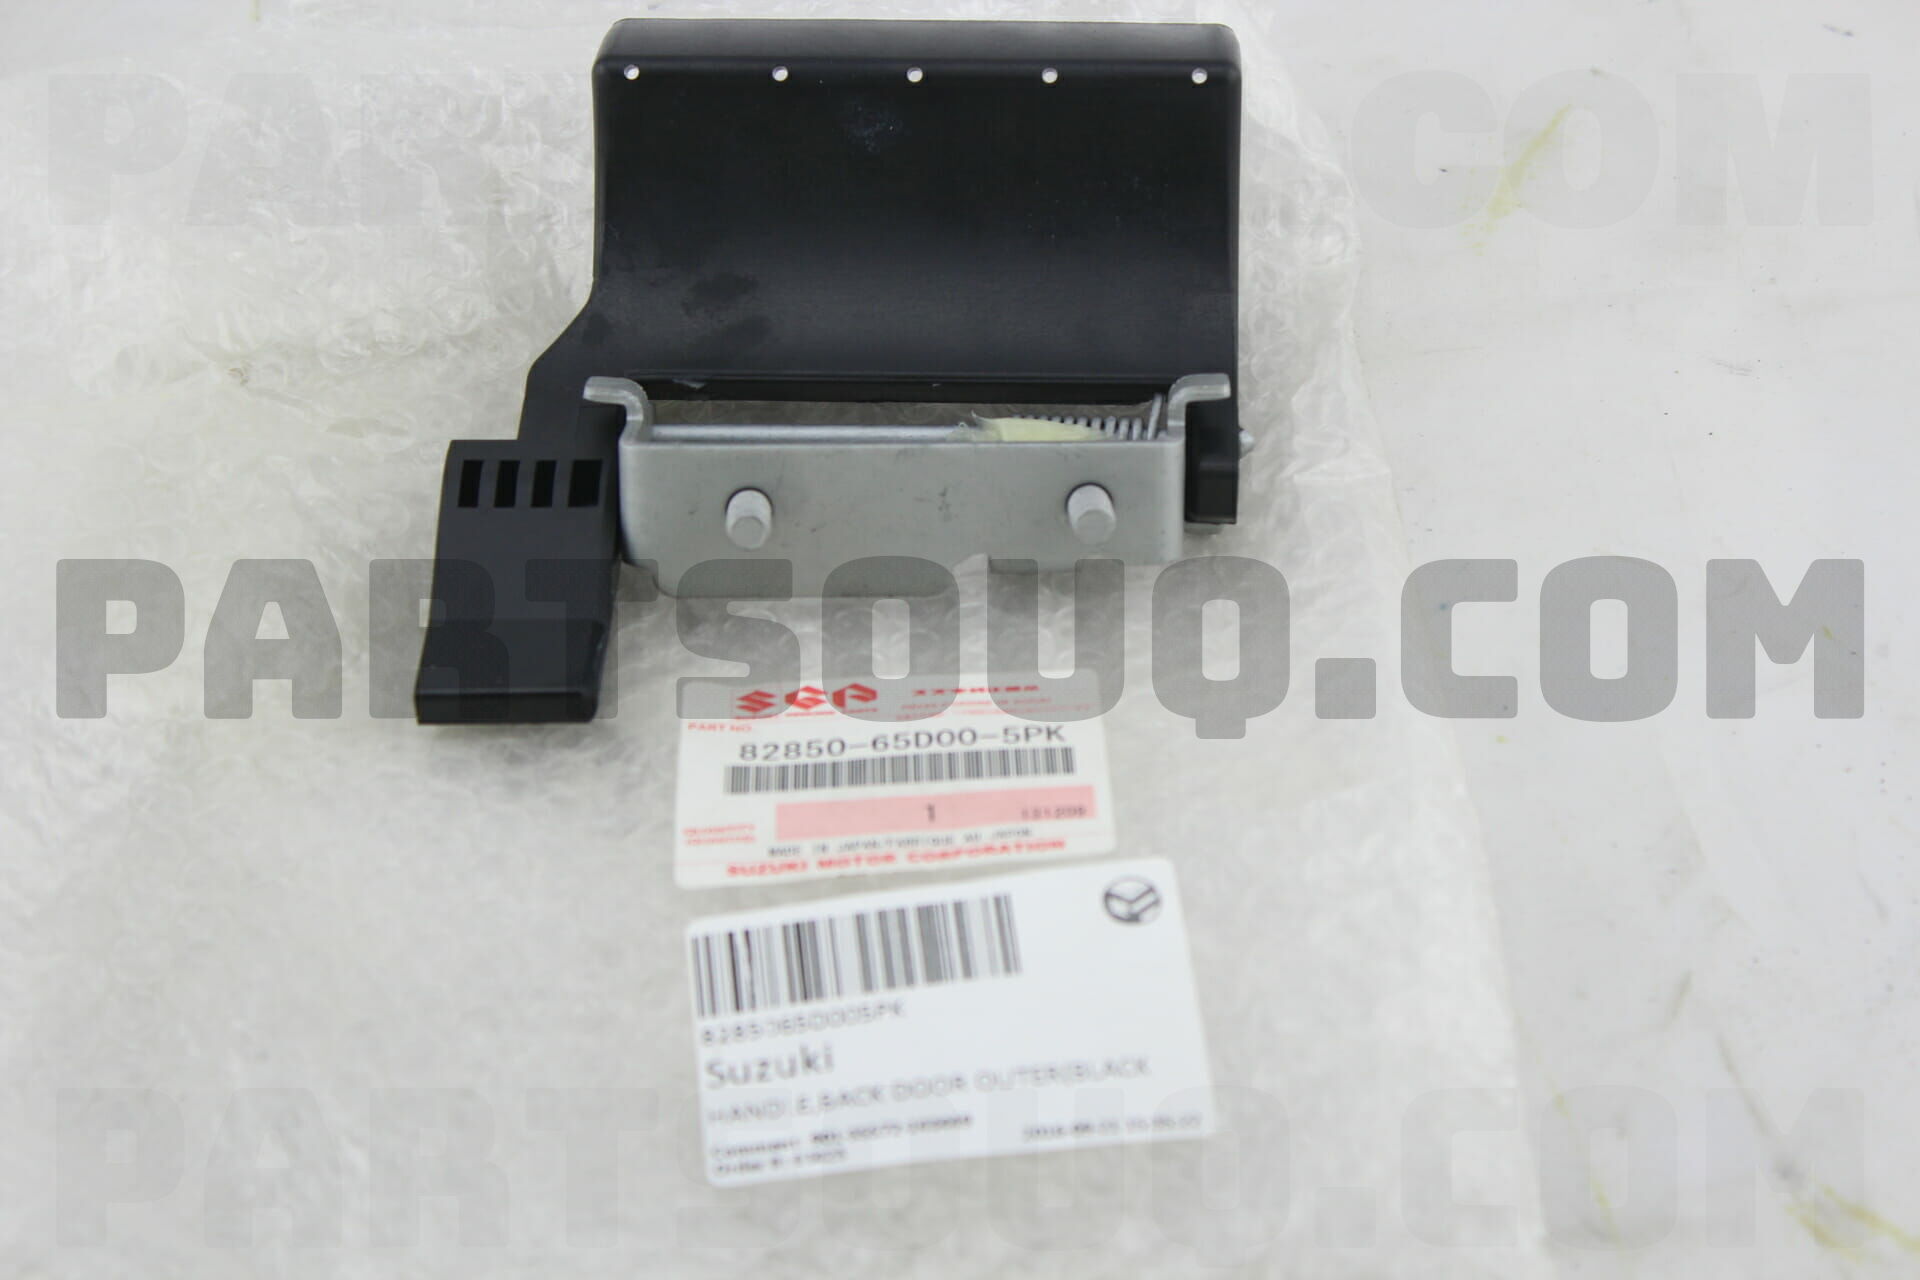 Handle, Door Outer (Black) 8285065D005Pk | Suzuki Parts | Partsouq